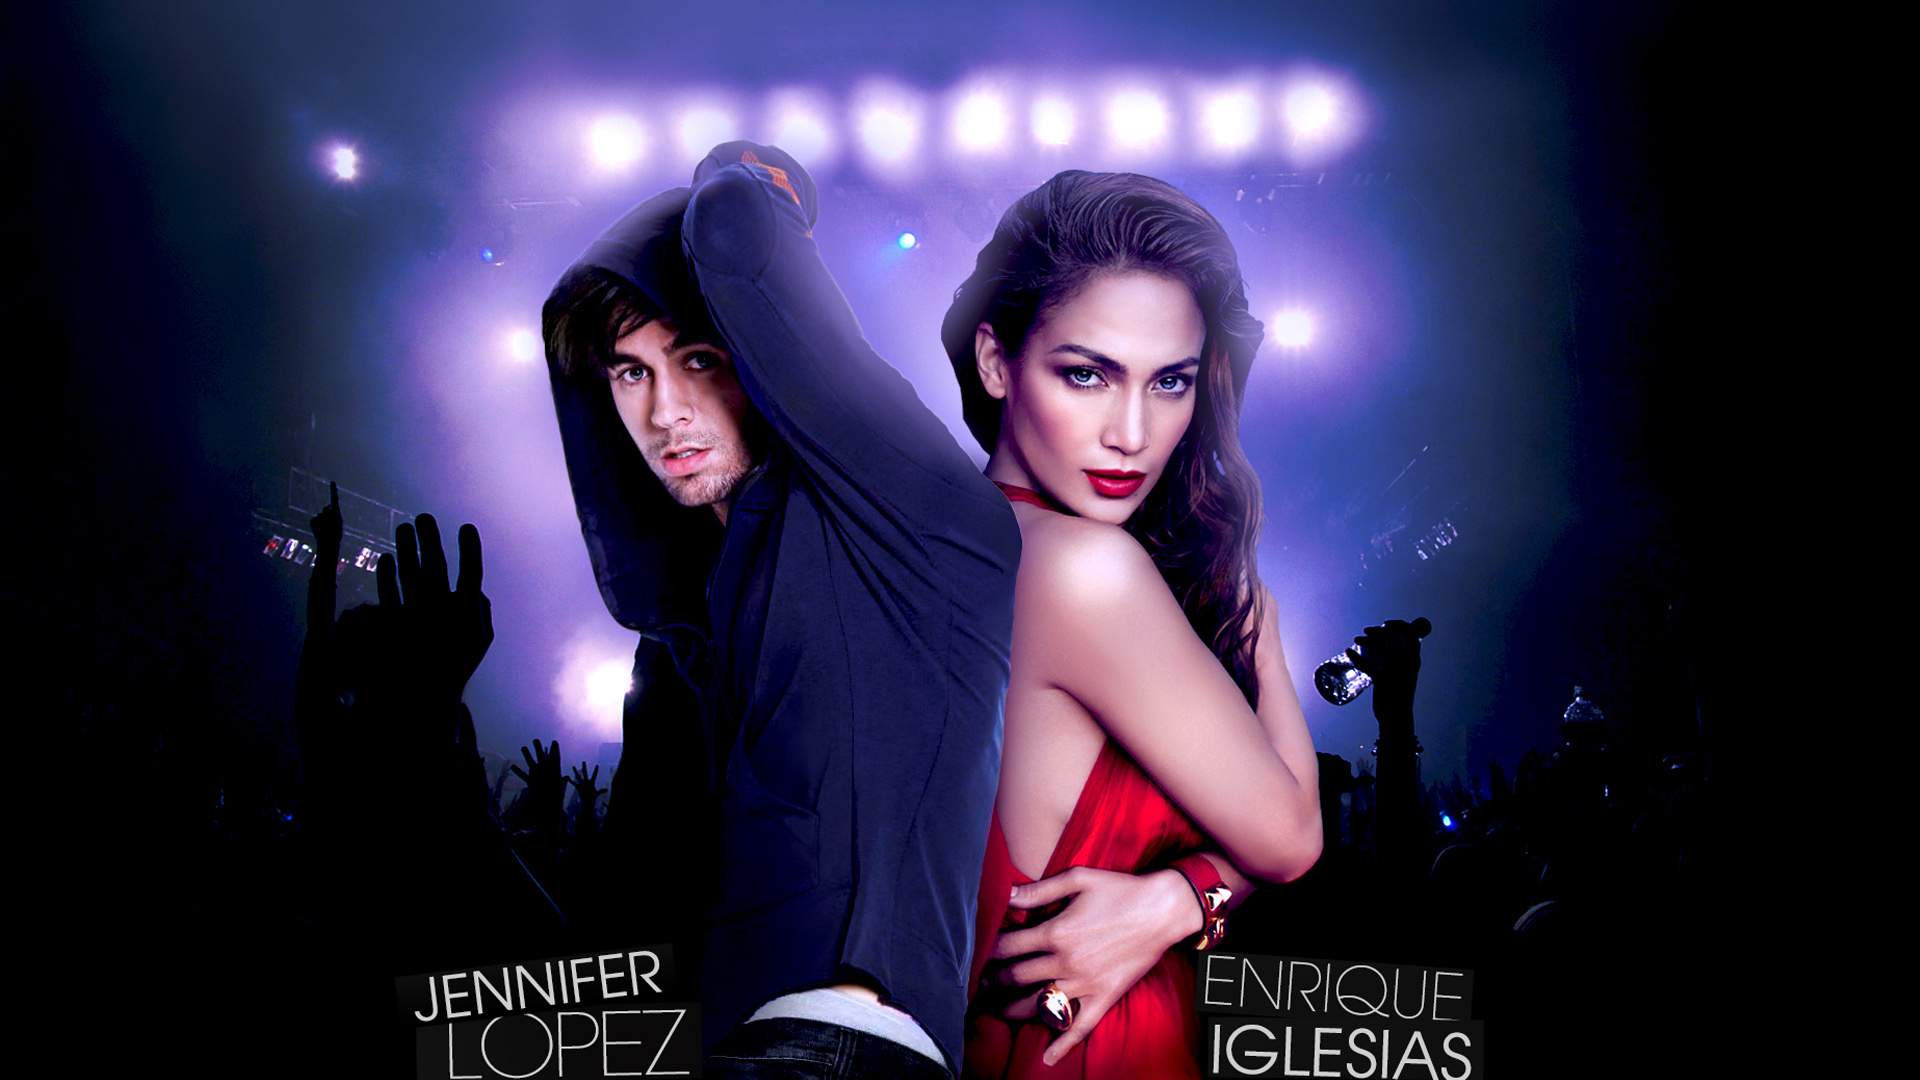 Jennifer Lopez Enrique Iglesias Tour Wallpaper Gallery